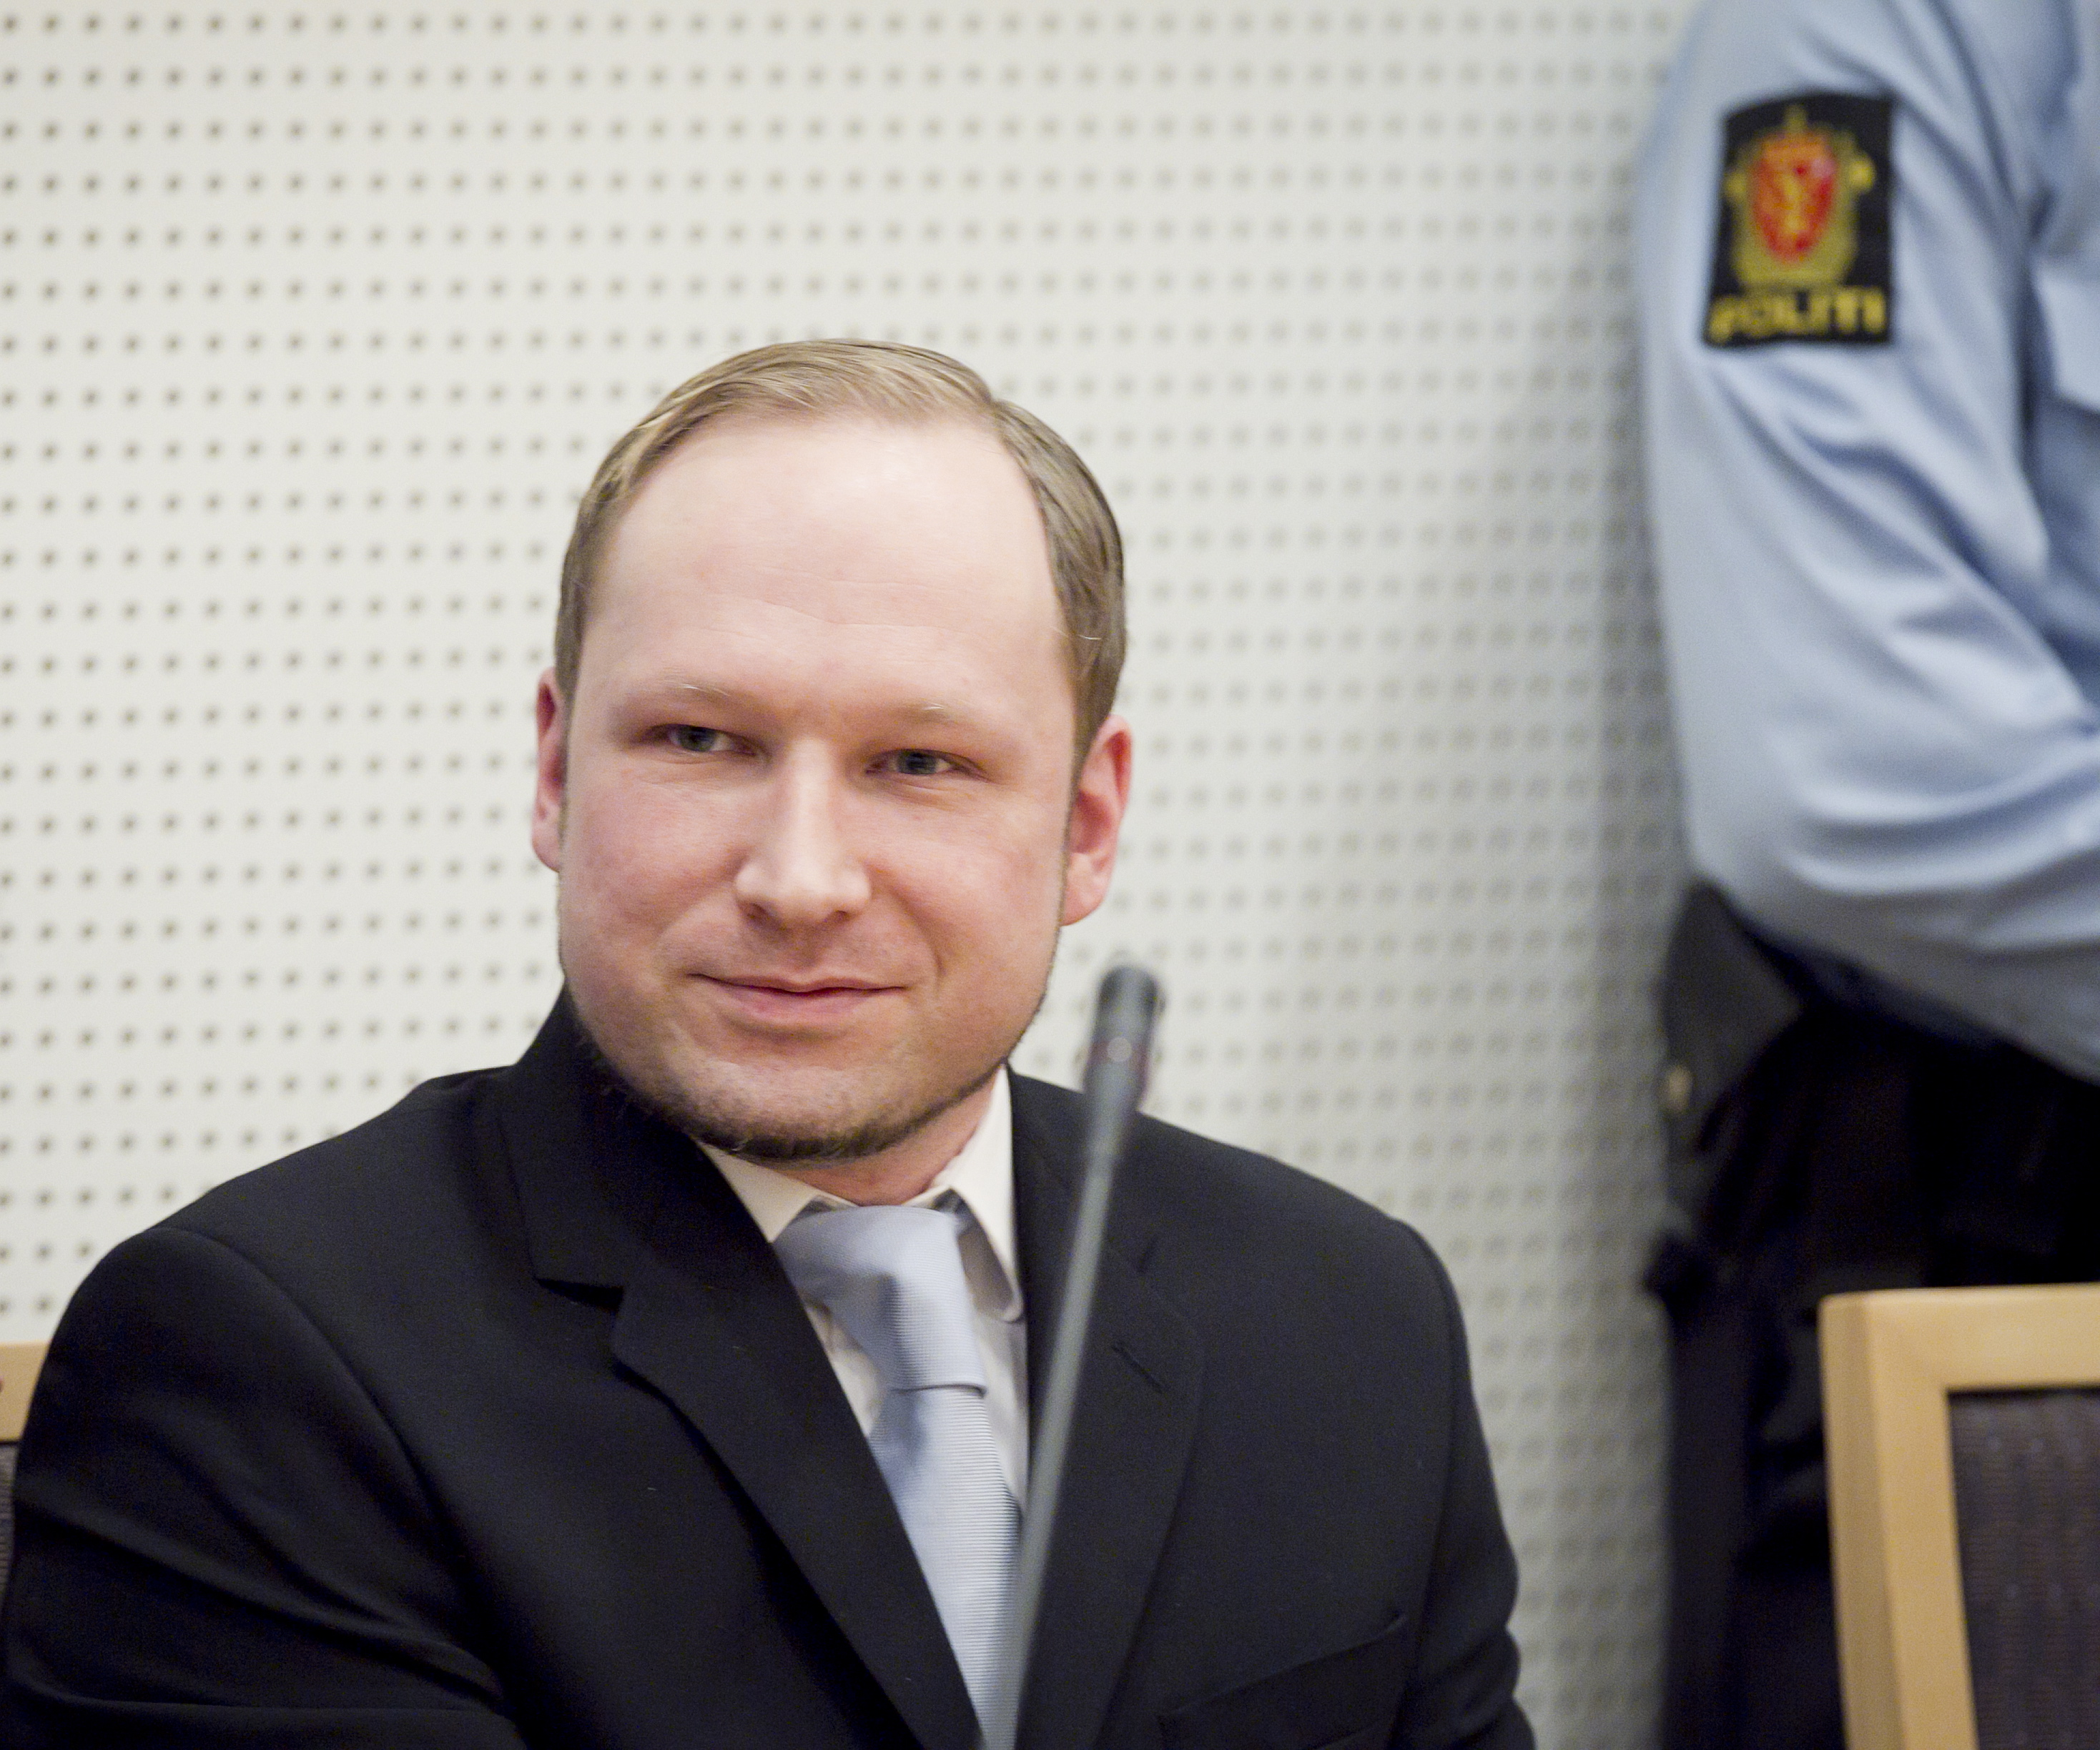 Oslo, Anders Behring Breivik, Charles Taylor, Terrordåd, Liberia, Monrovia